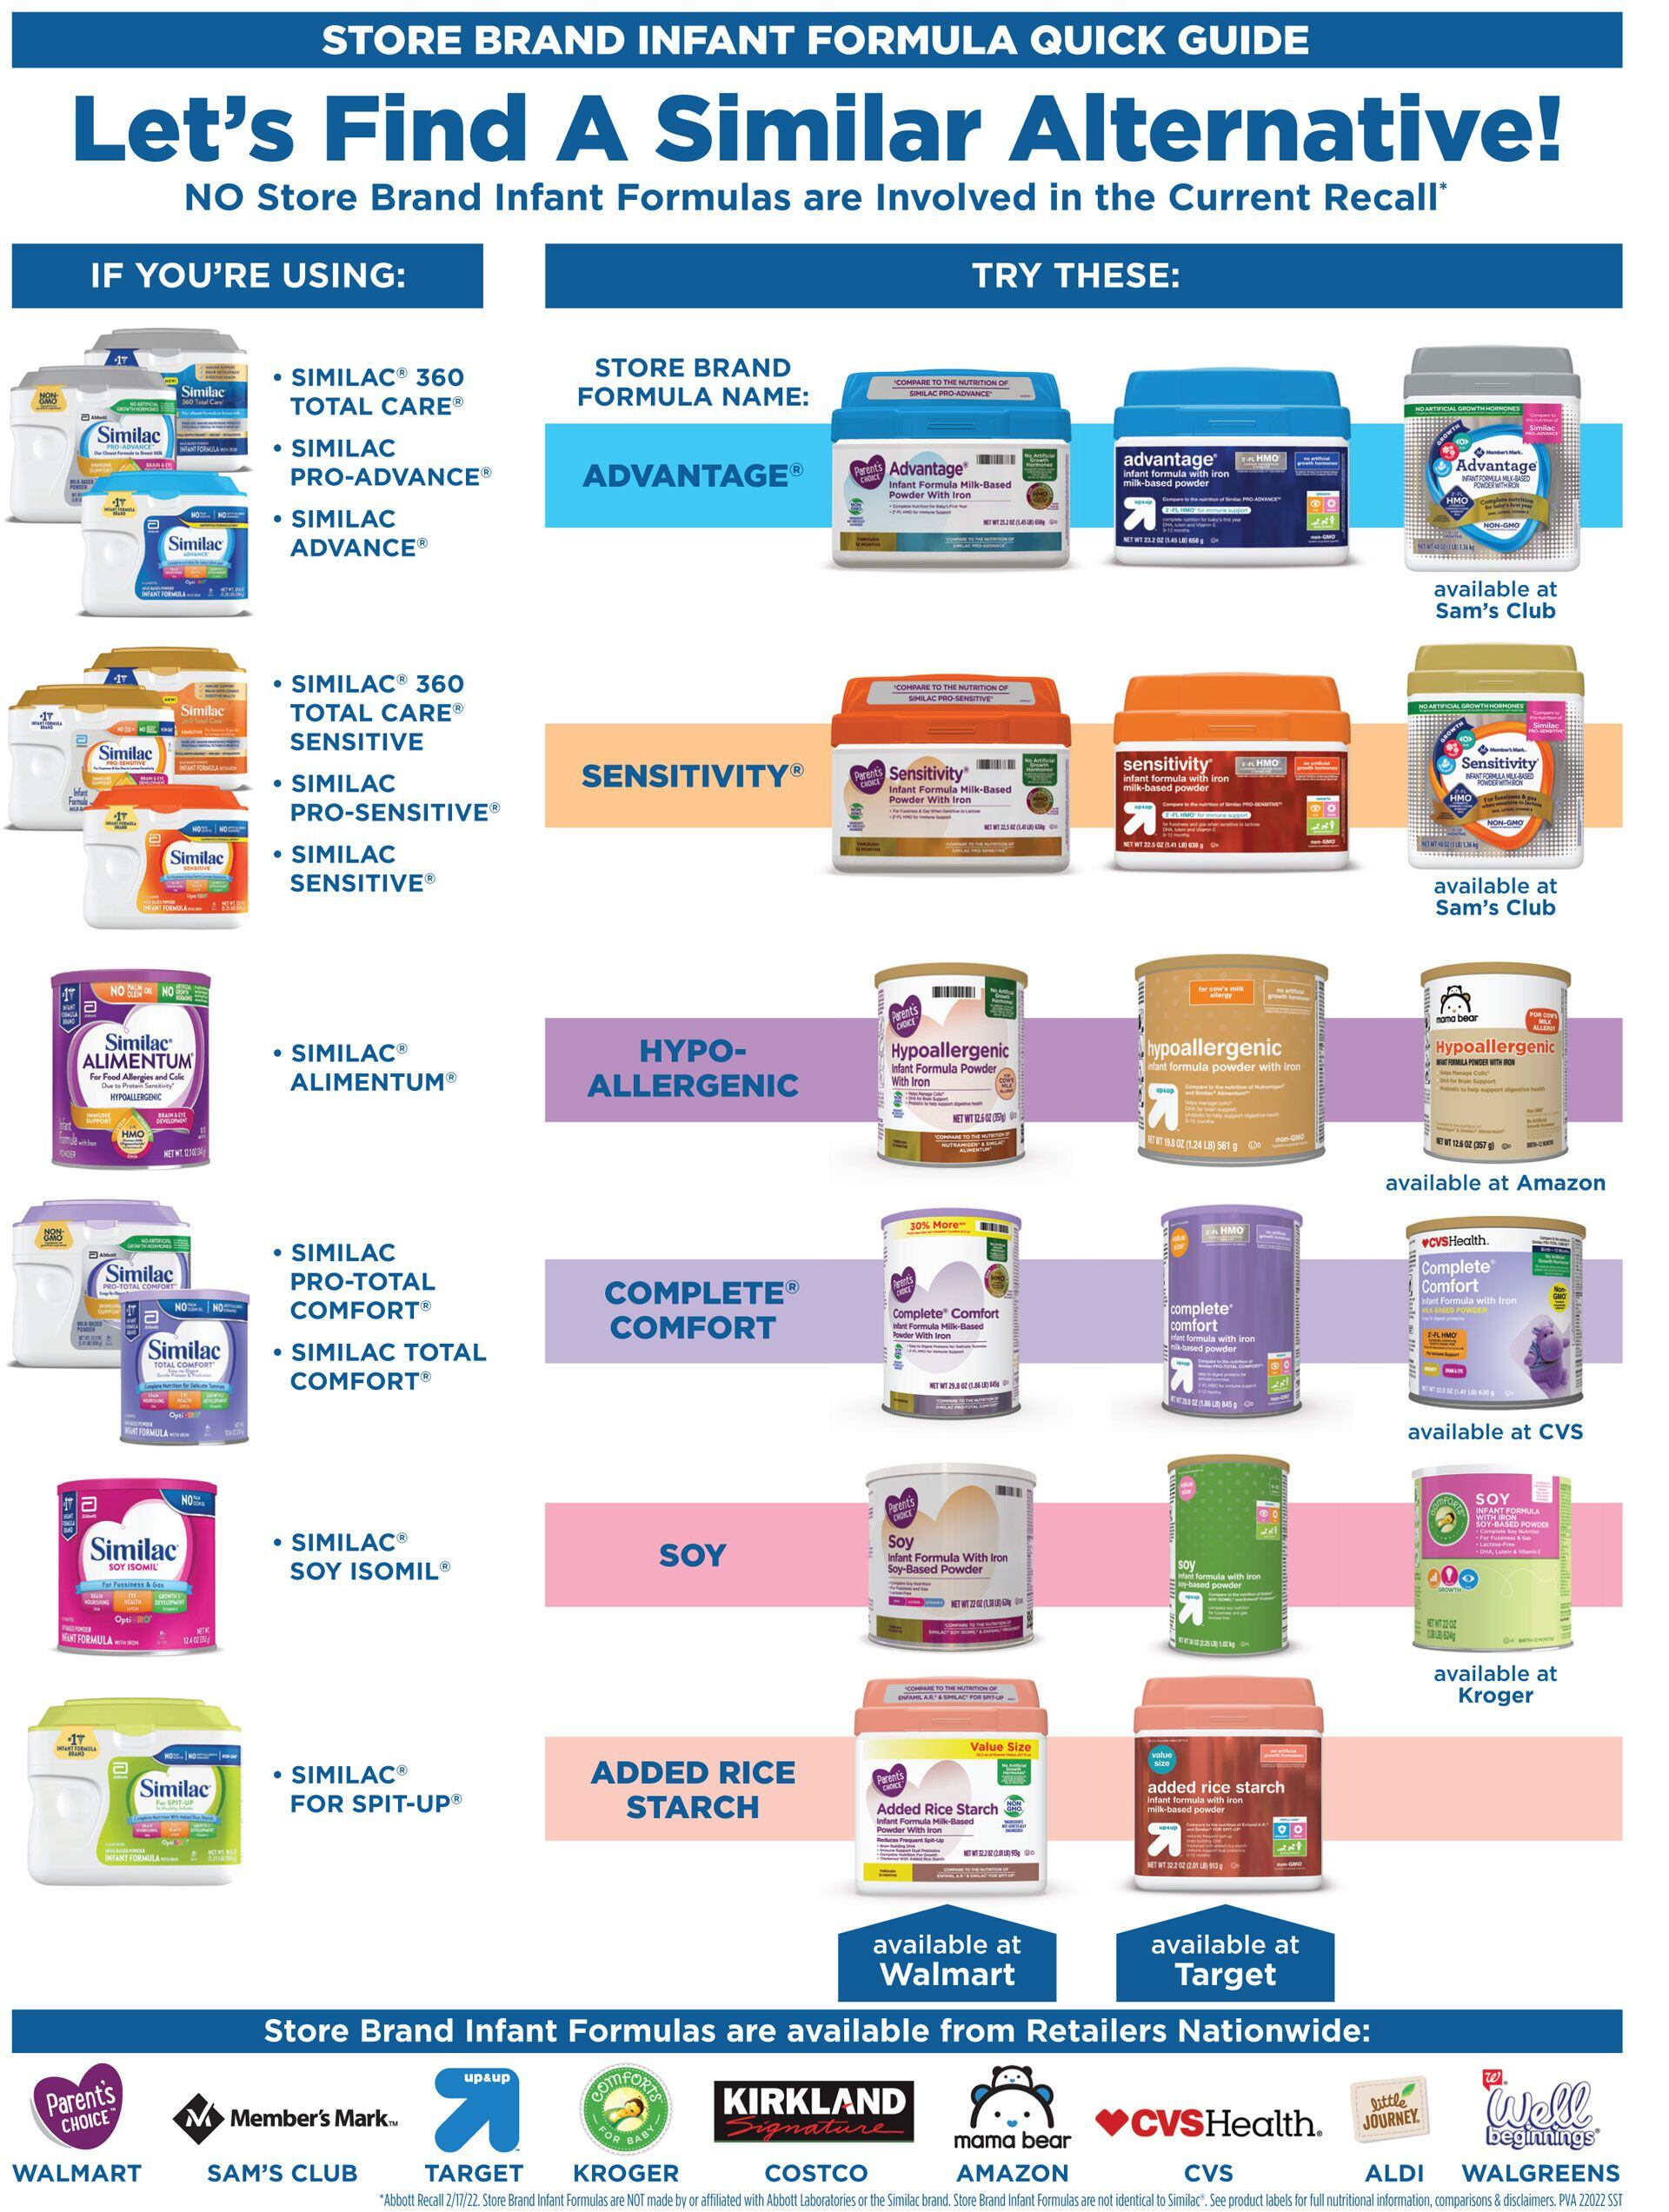 StoreBrandFormula.com compiled this graphic of alternative formulas for parents searching for baby formula.